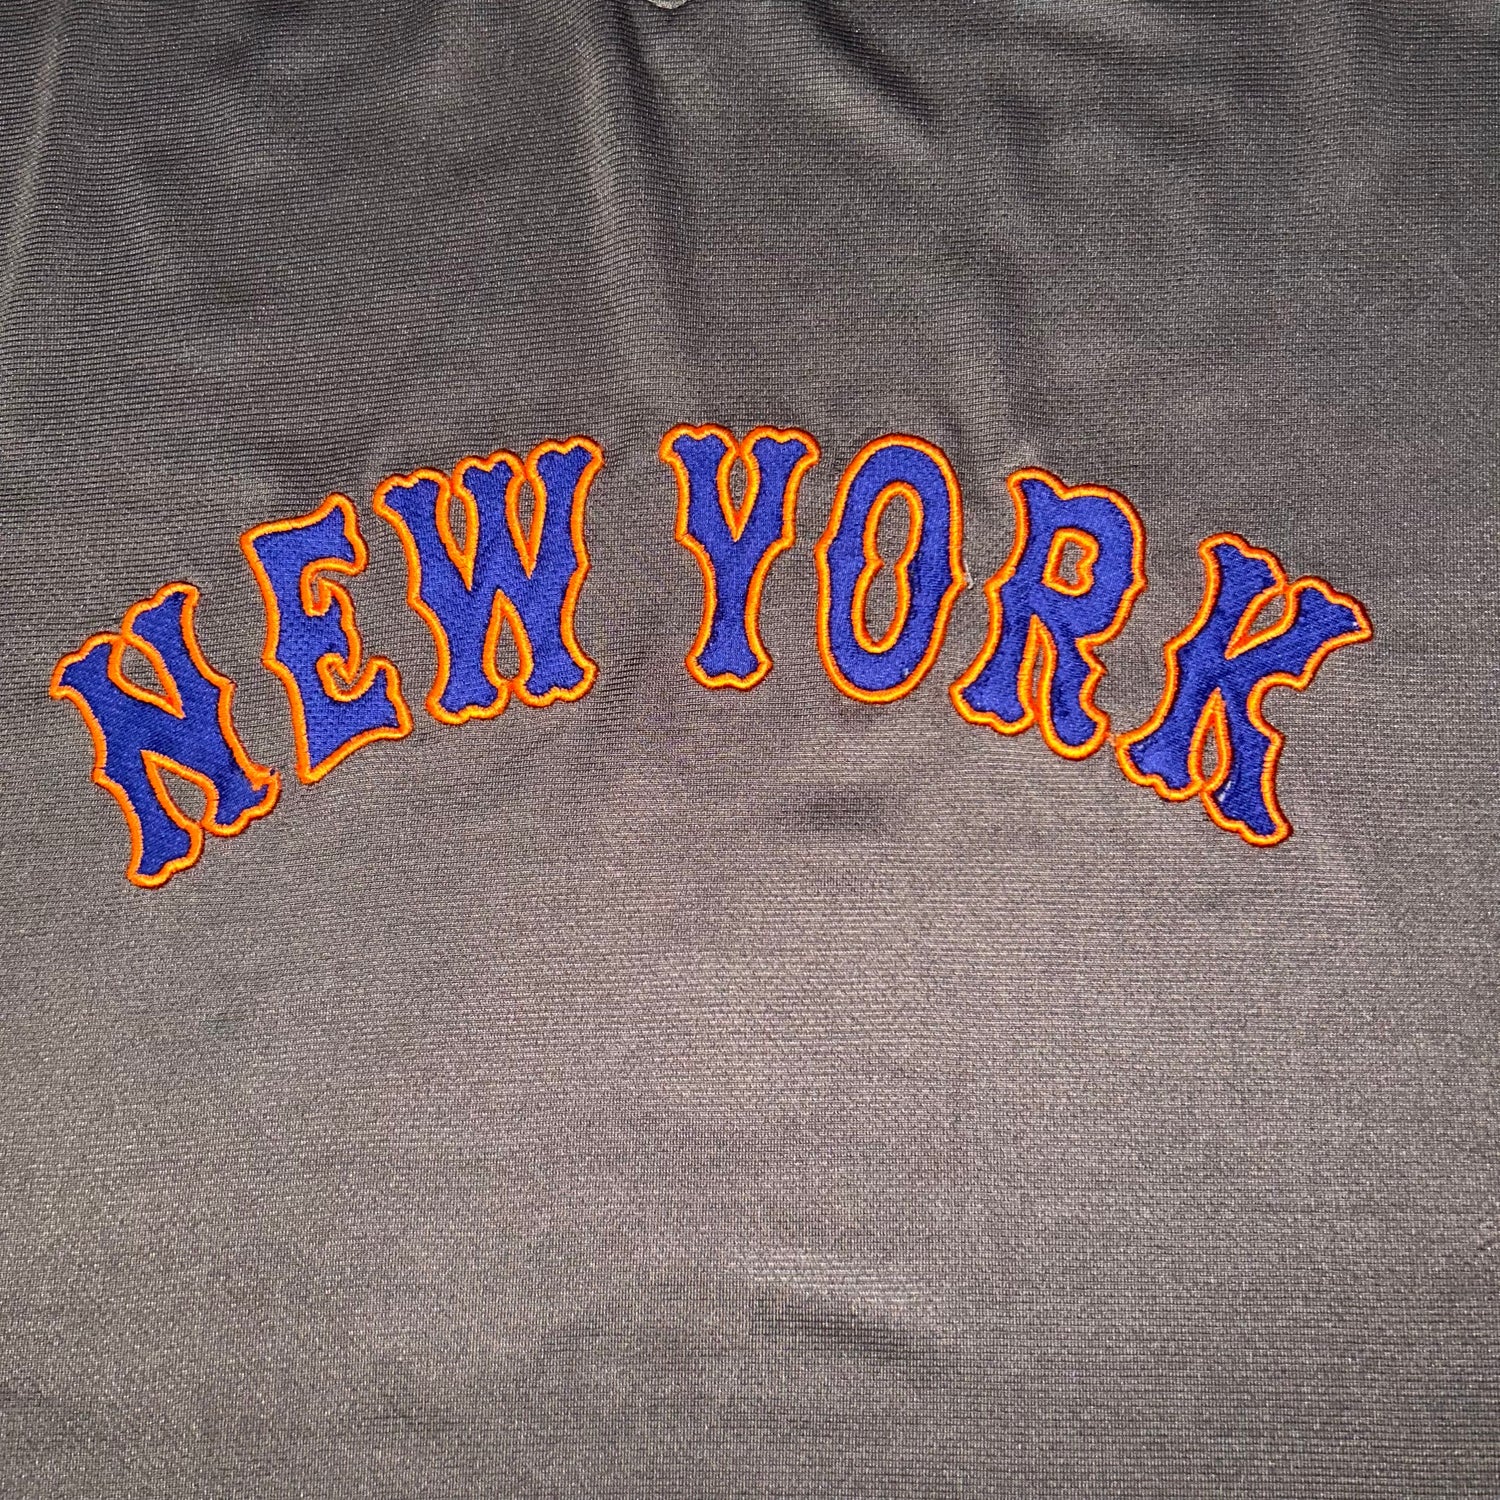 Jersey New York Mets MLB  (XXXL)